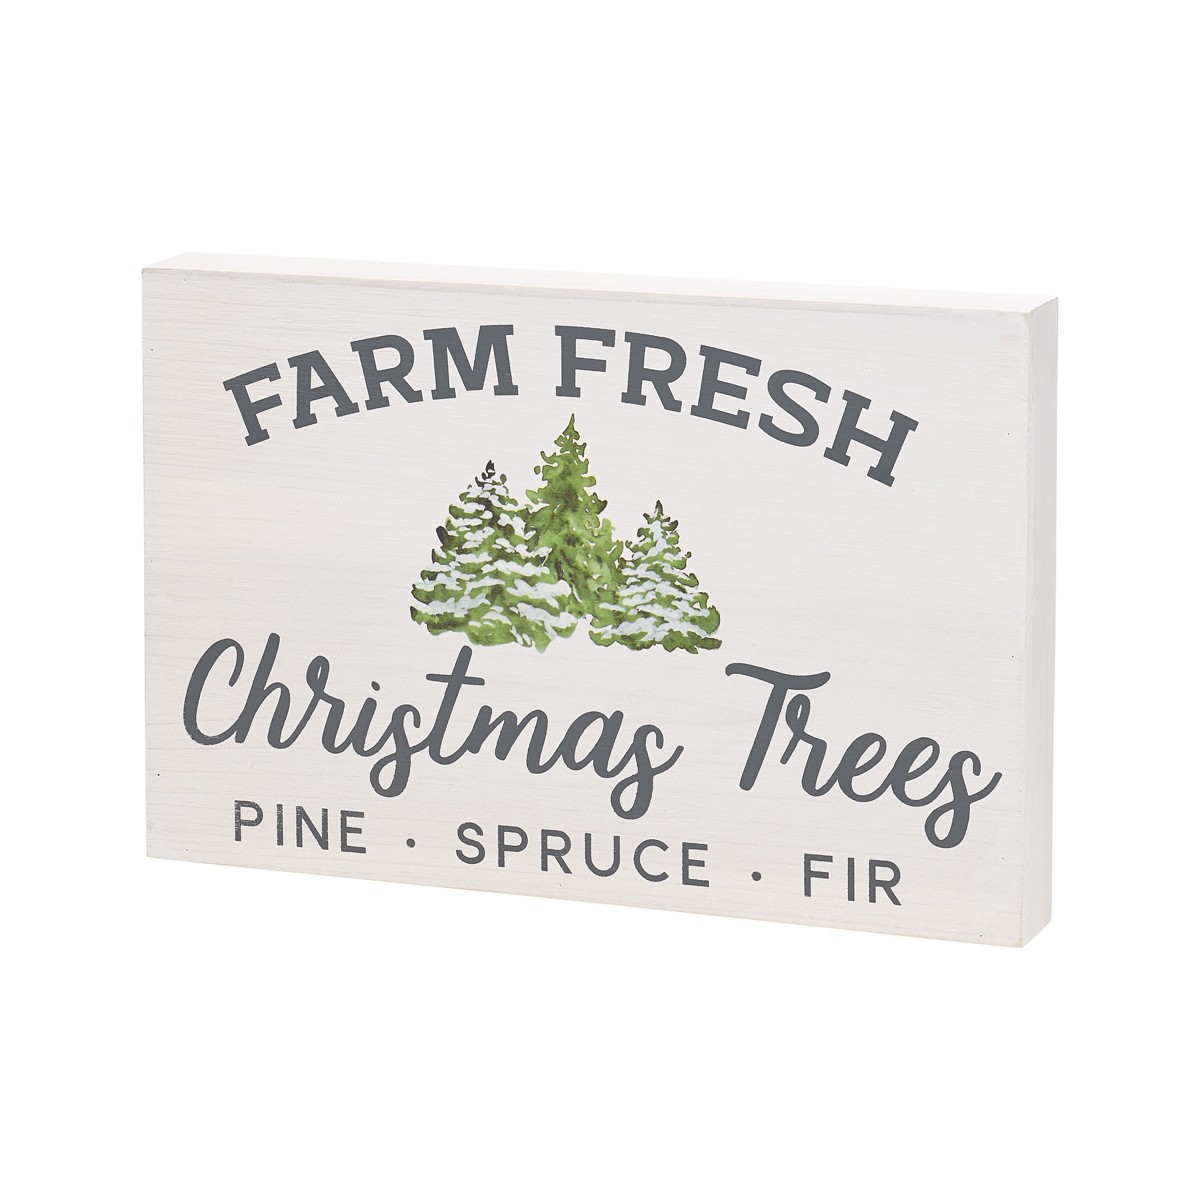 White Box Sign - Farm Fresh Christmas Trees